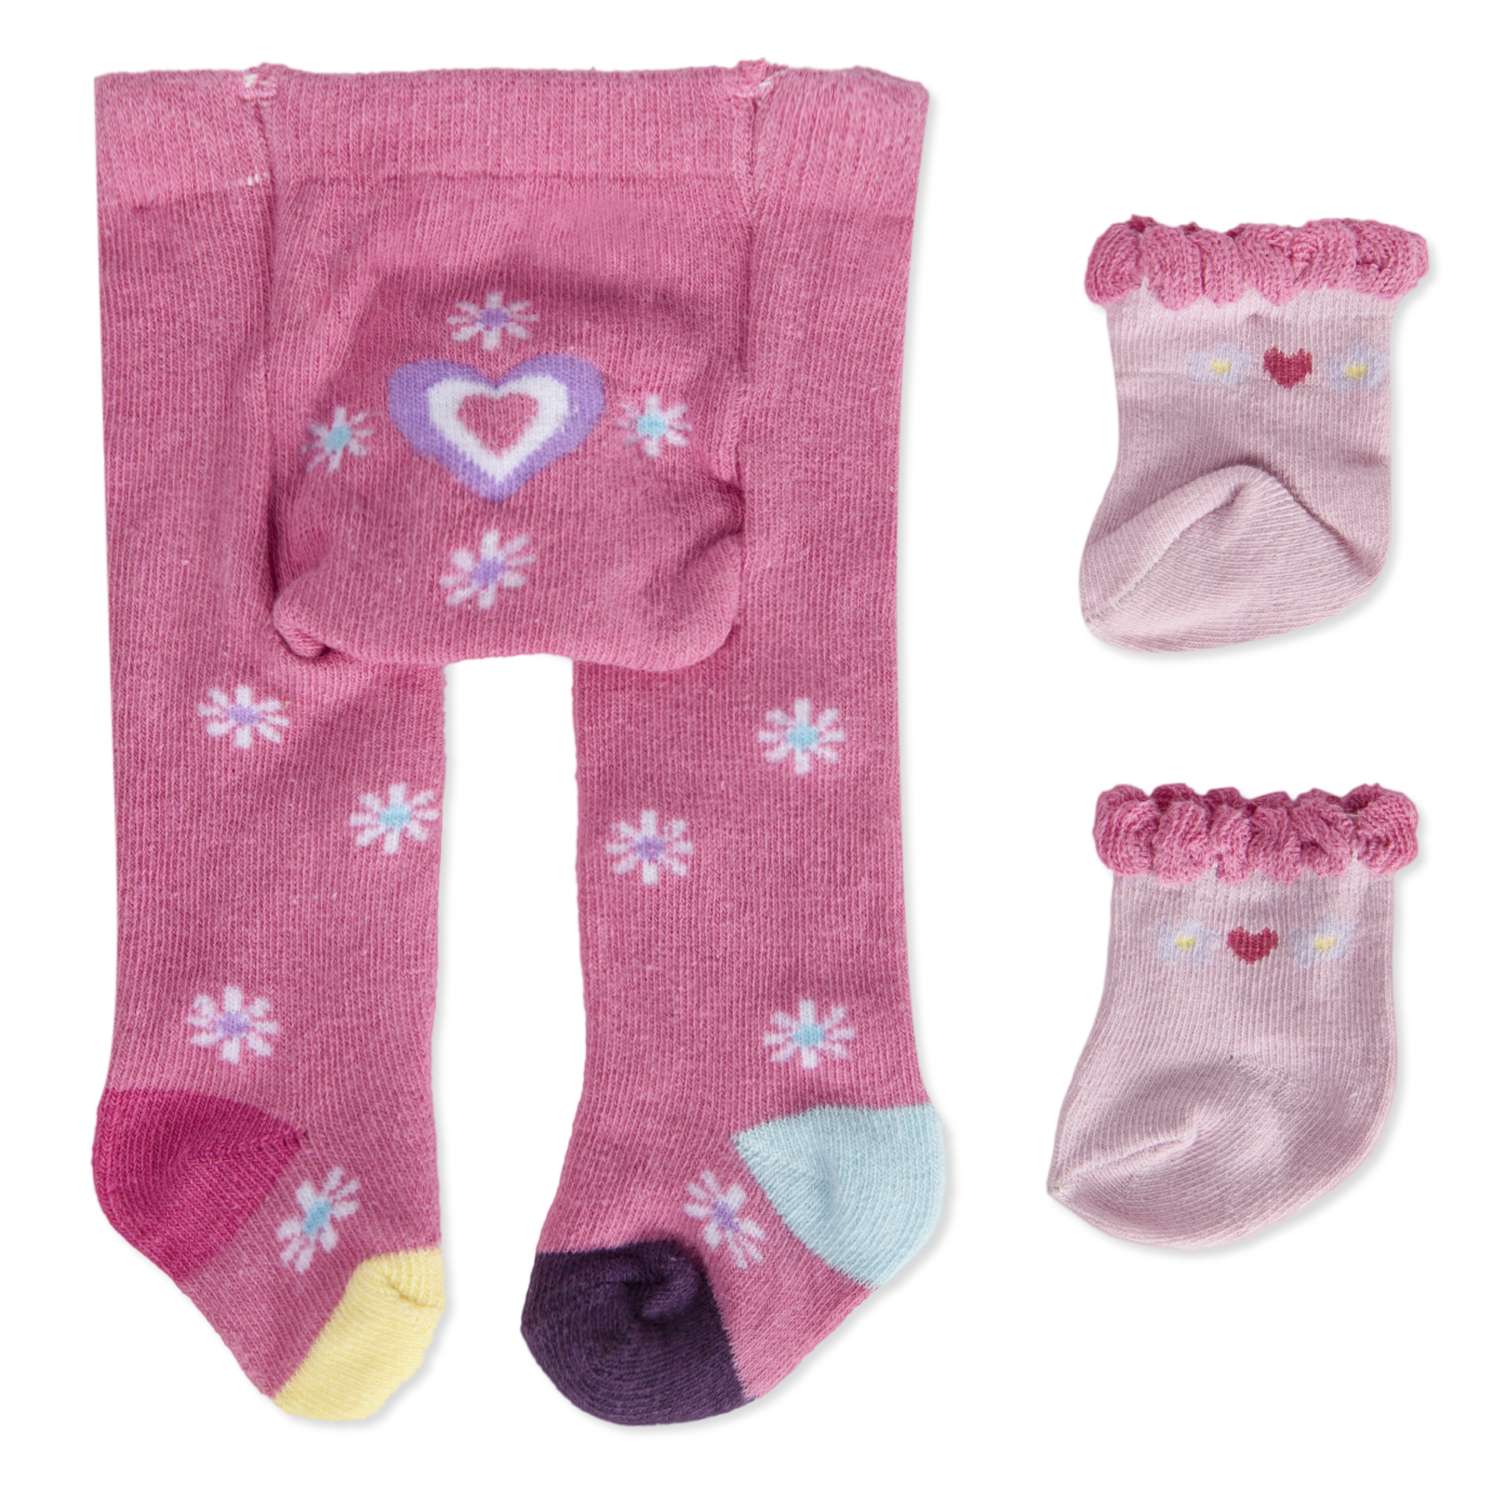 Одежда для Baby Born.Как сшить носки и трусы для куклы. How to sew socks and underpants for a doll.